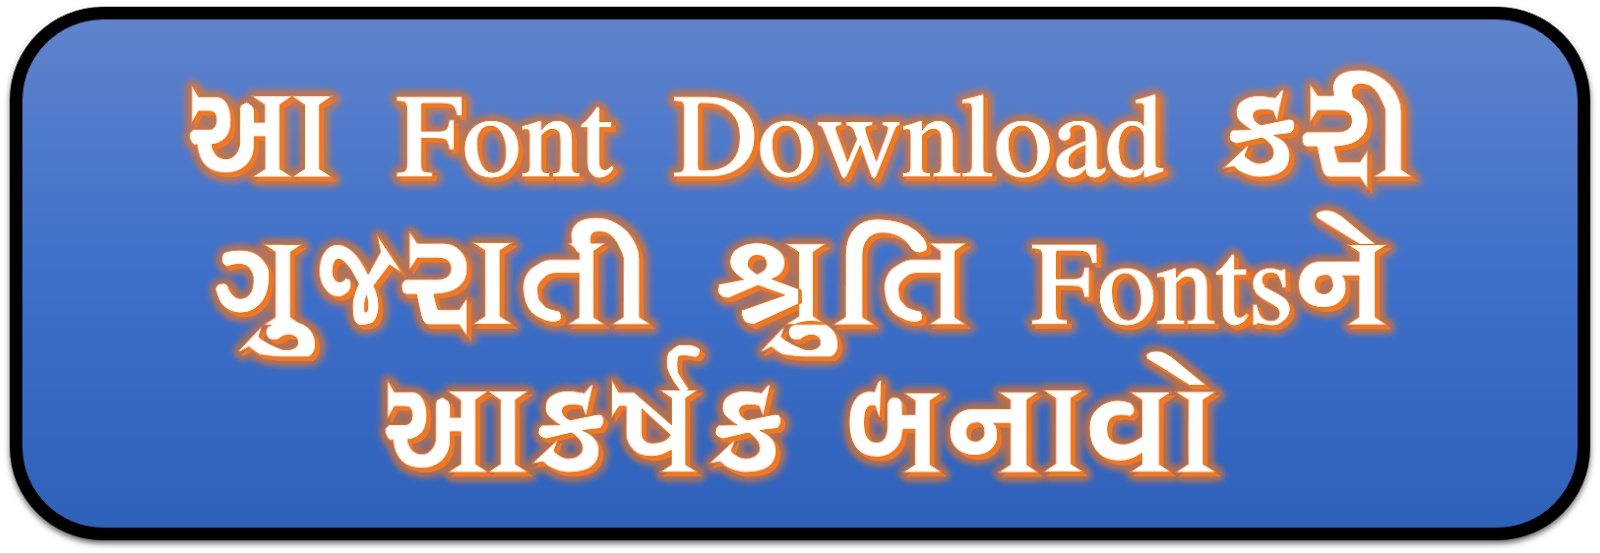 gujarati fonts shruti download